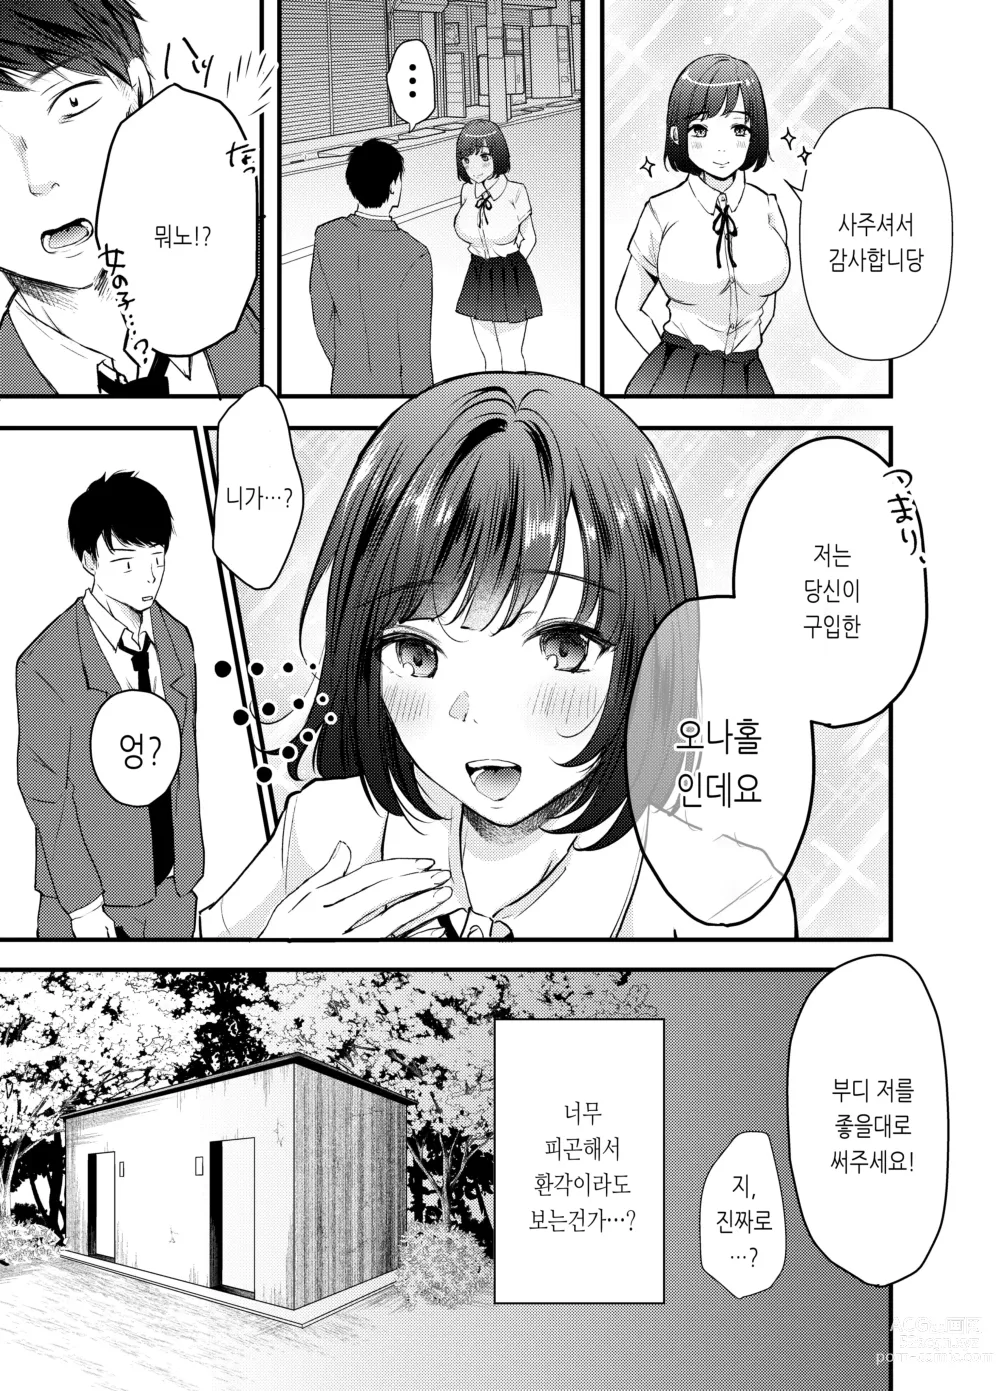 Page 6 of doujinshi Manko Jihanki